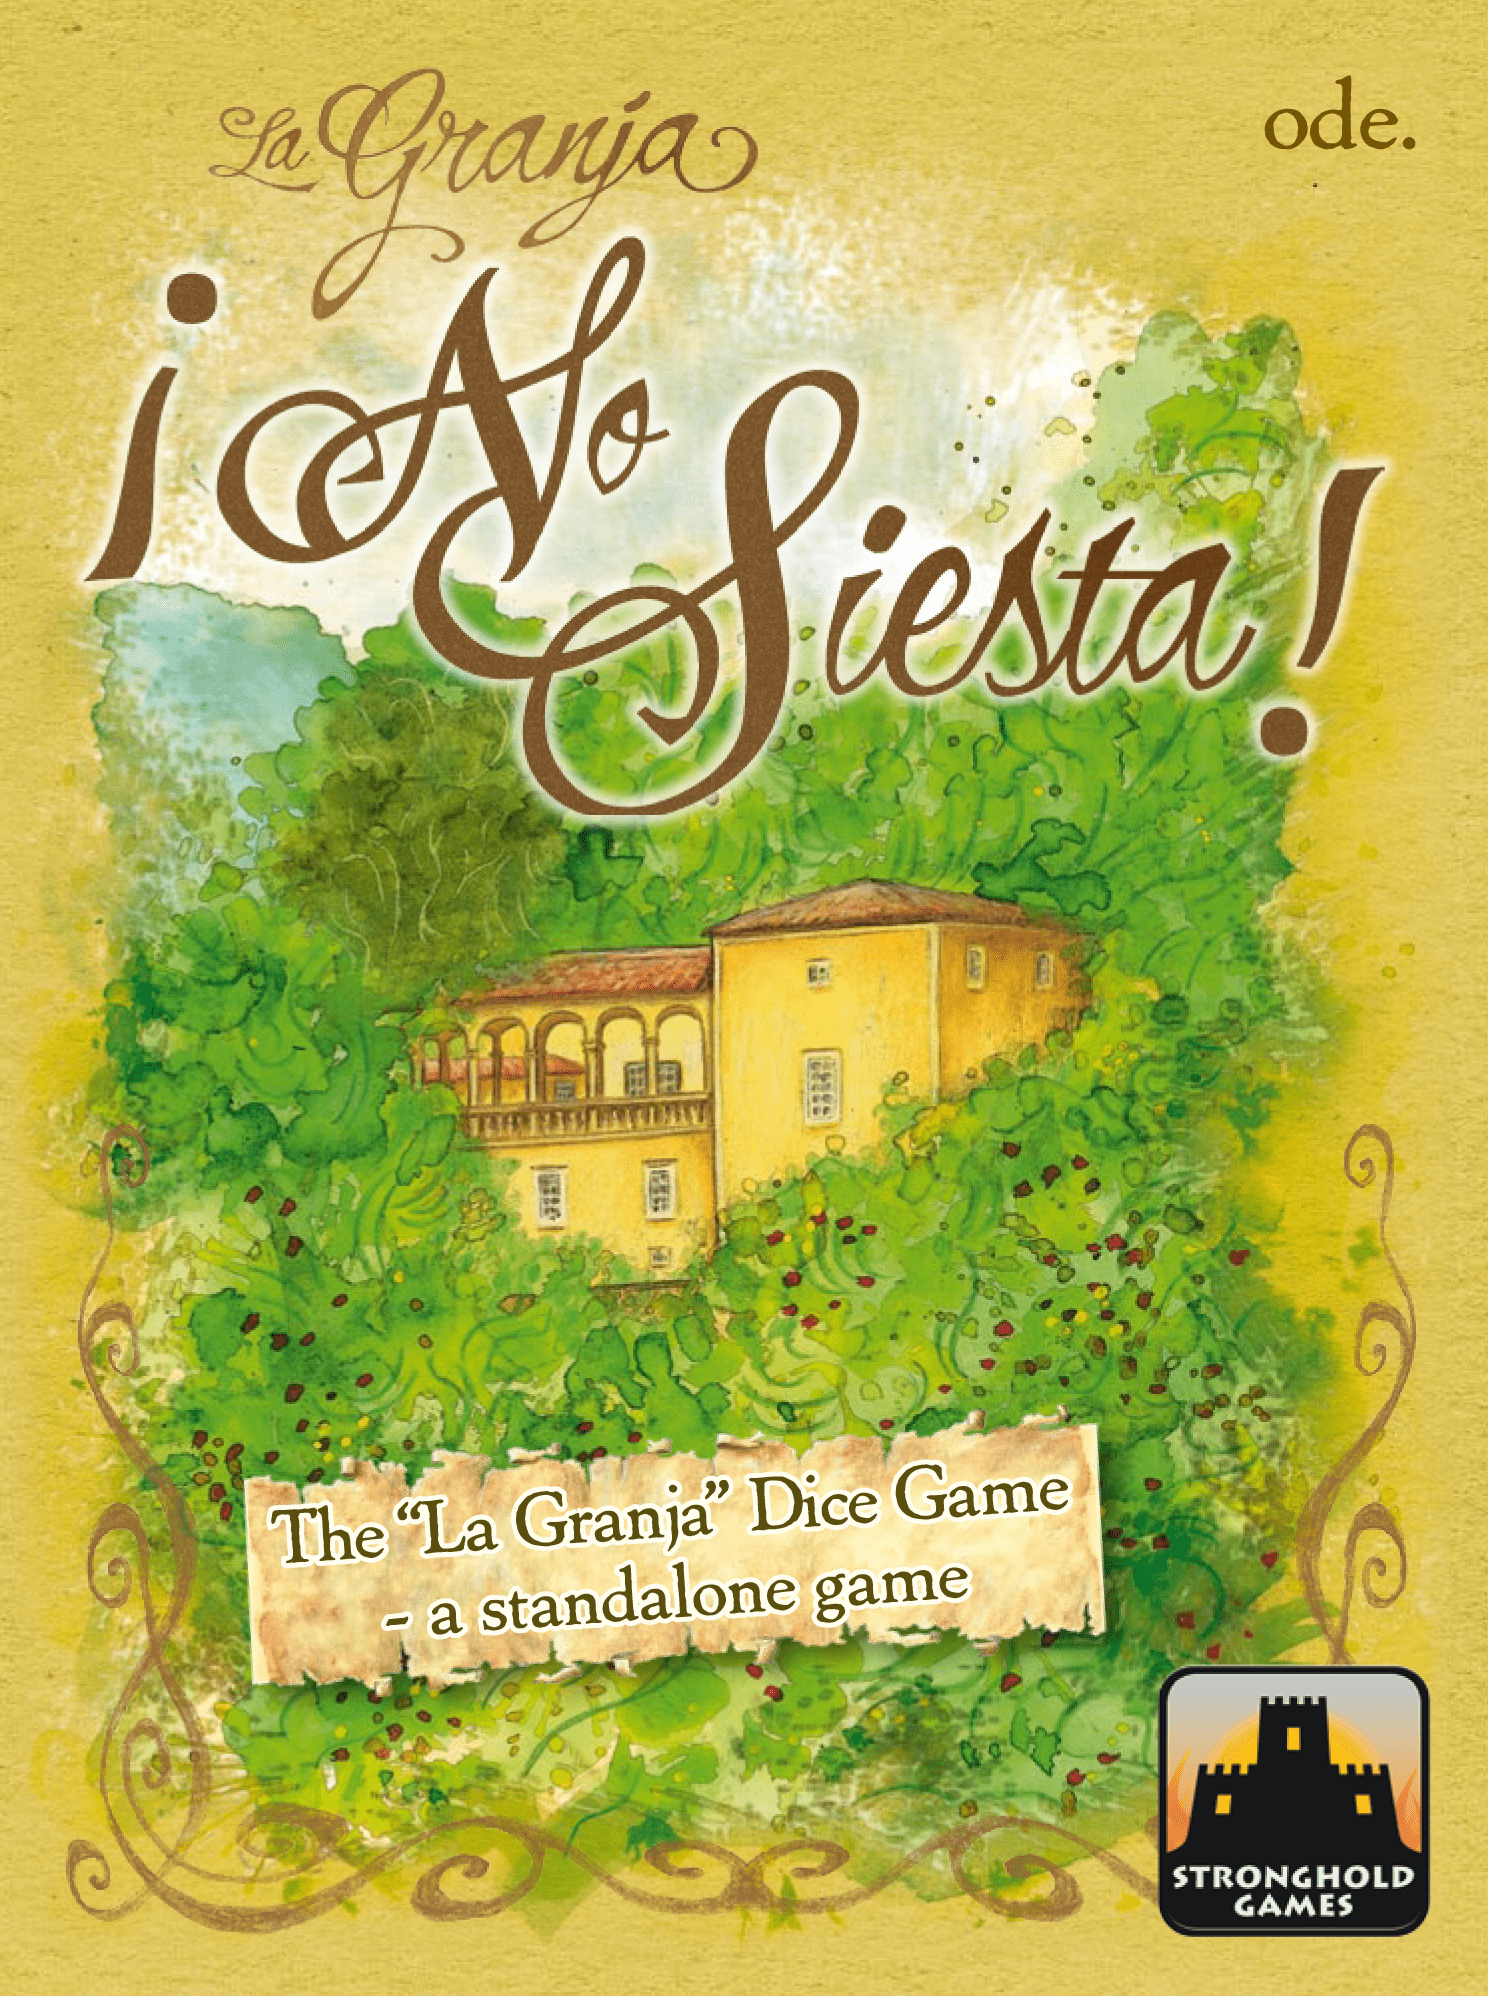 La Granja: The Dice Game - No Siesta!